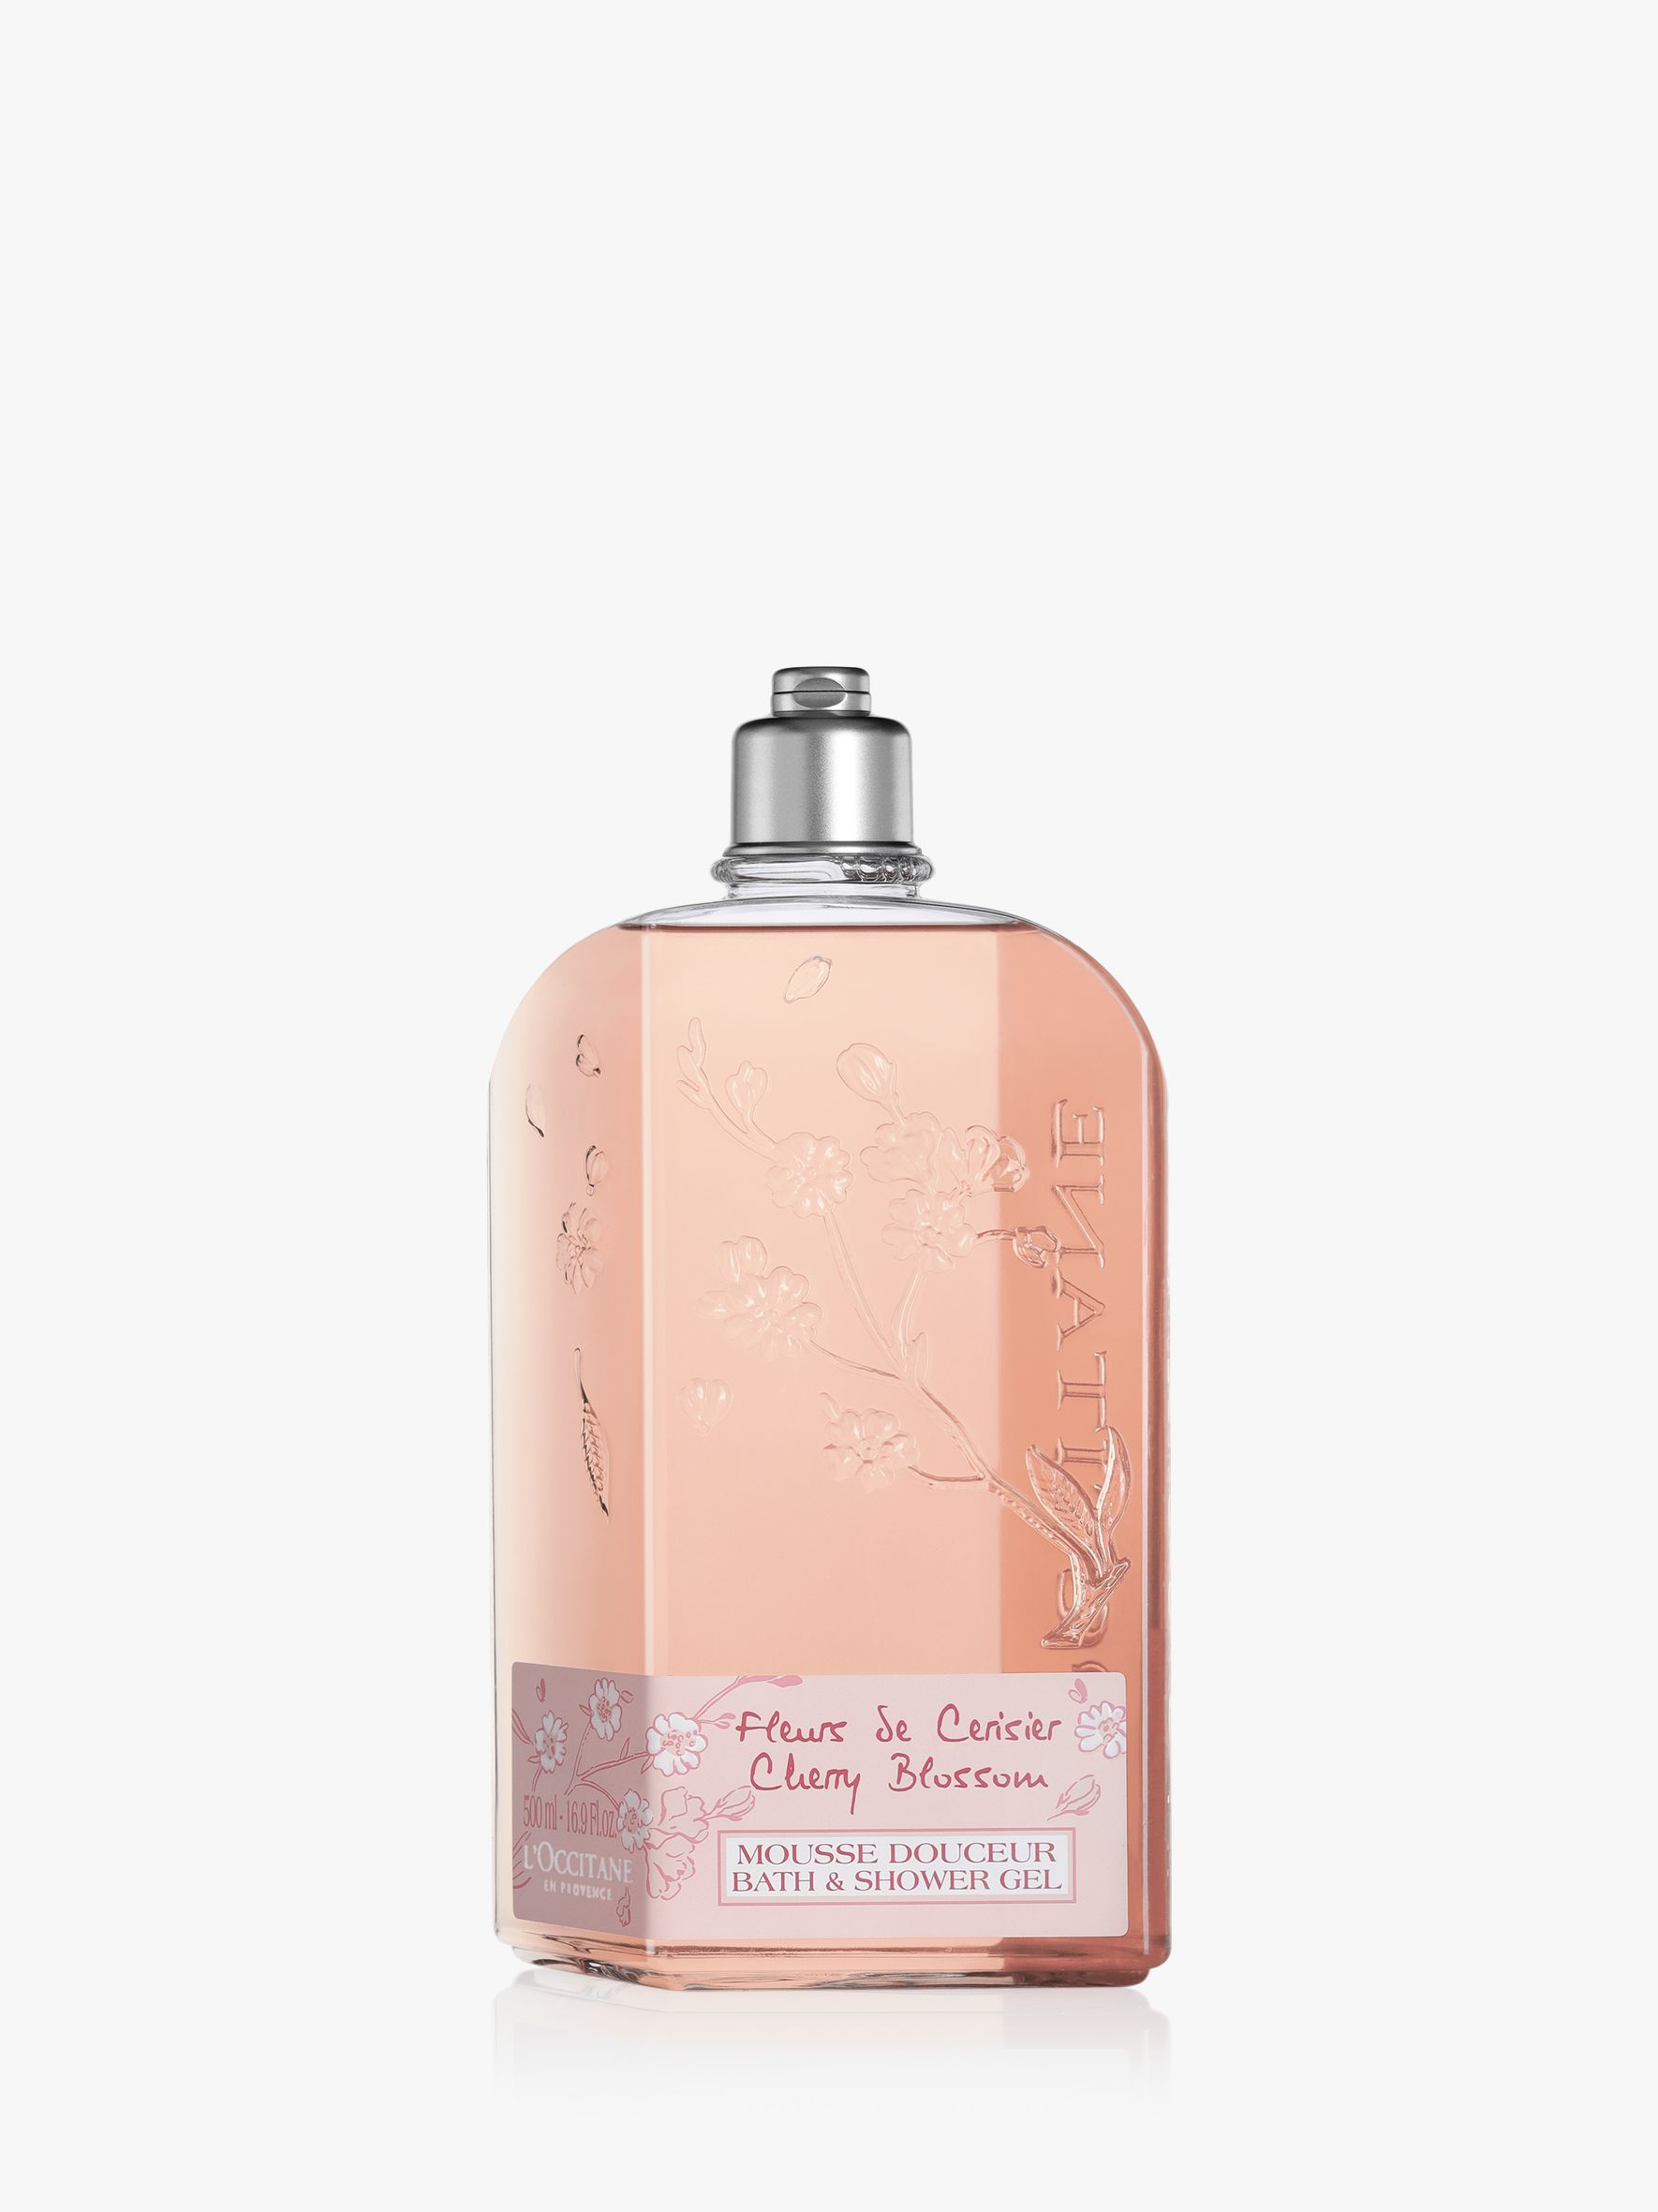 L'Occitane Cherry Blossom Bath & Shower Gel, Jumbo 500ml at John Lewis ...